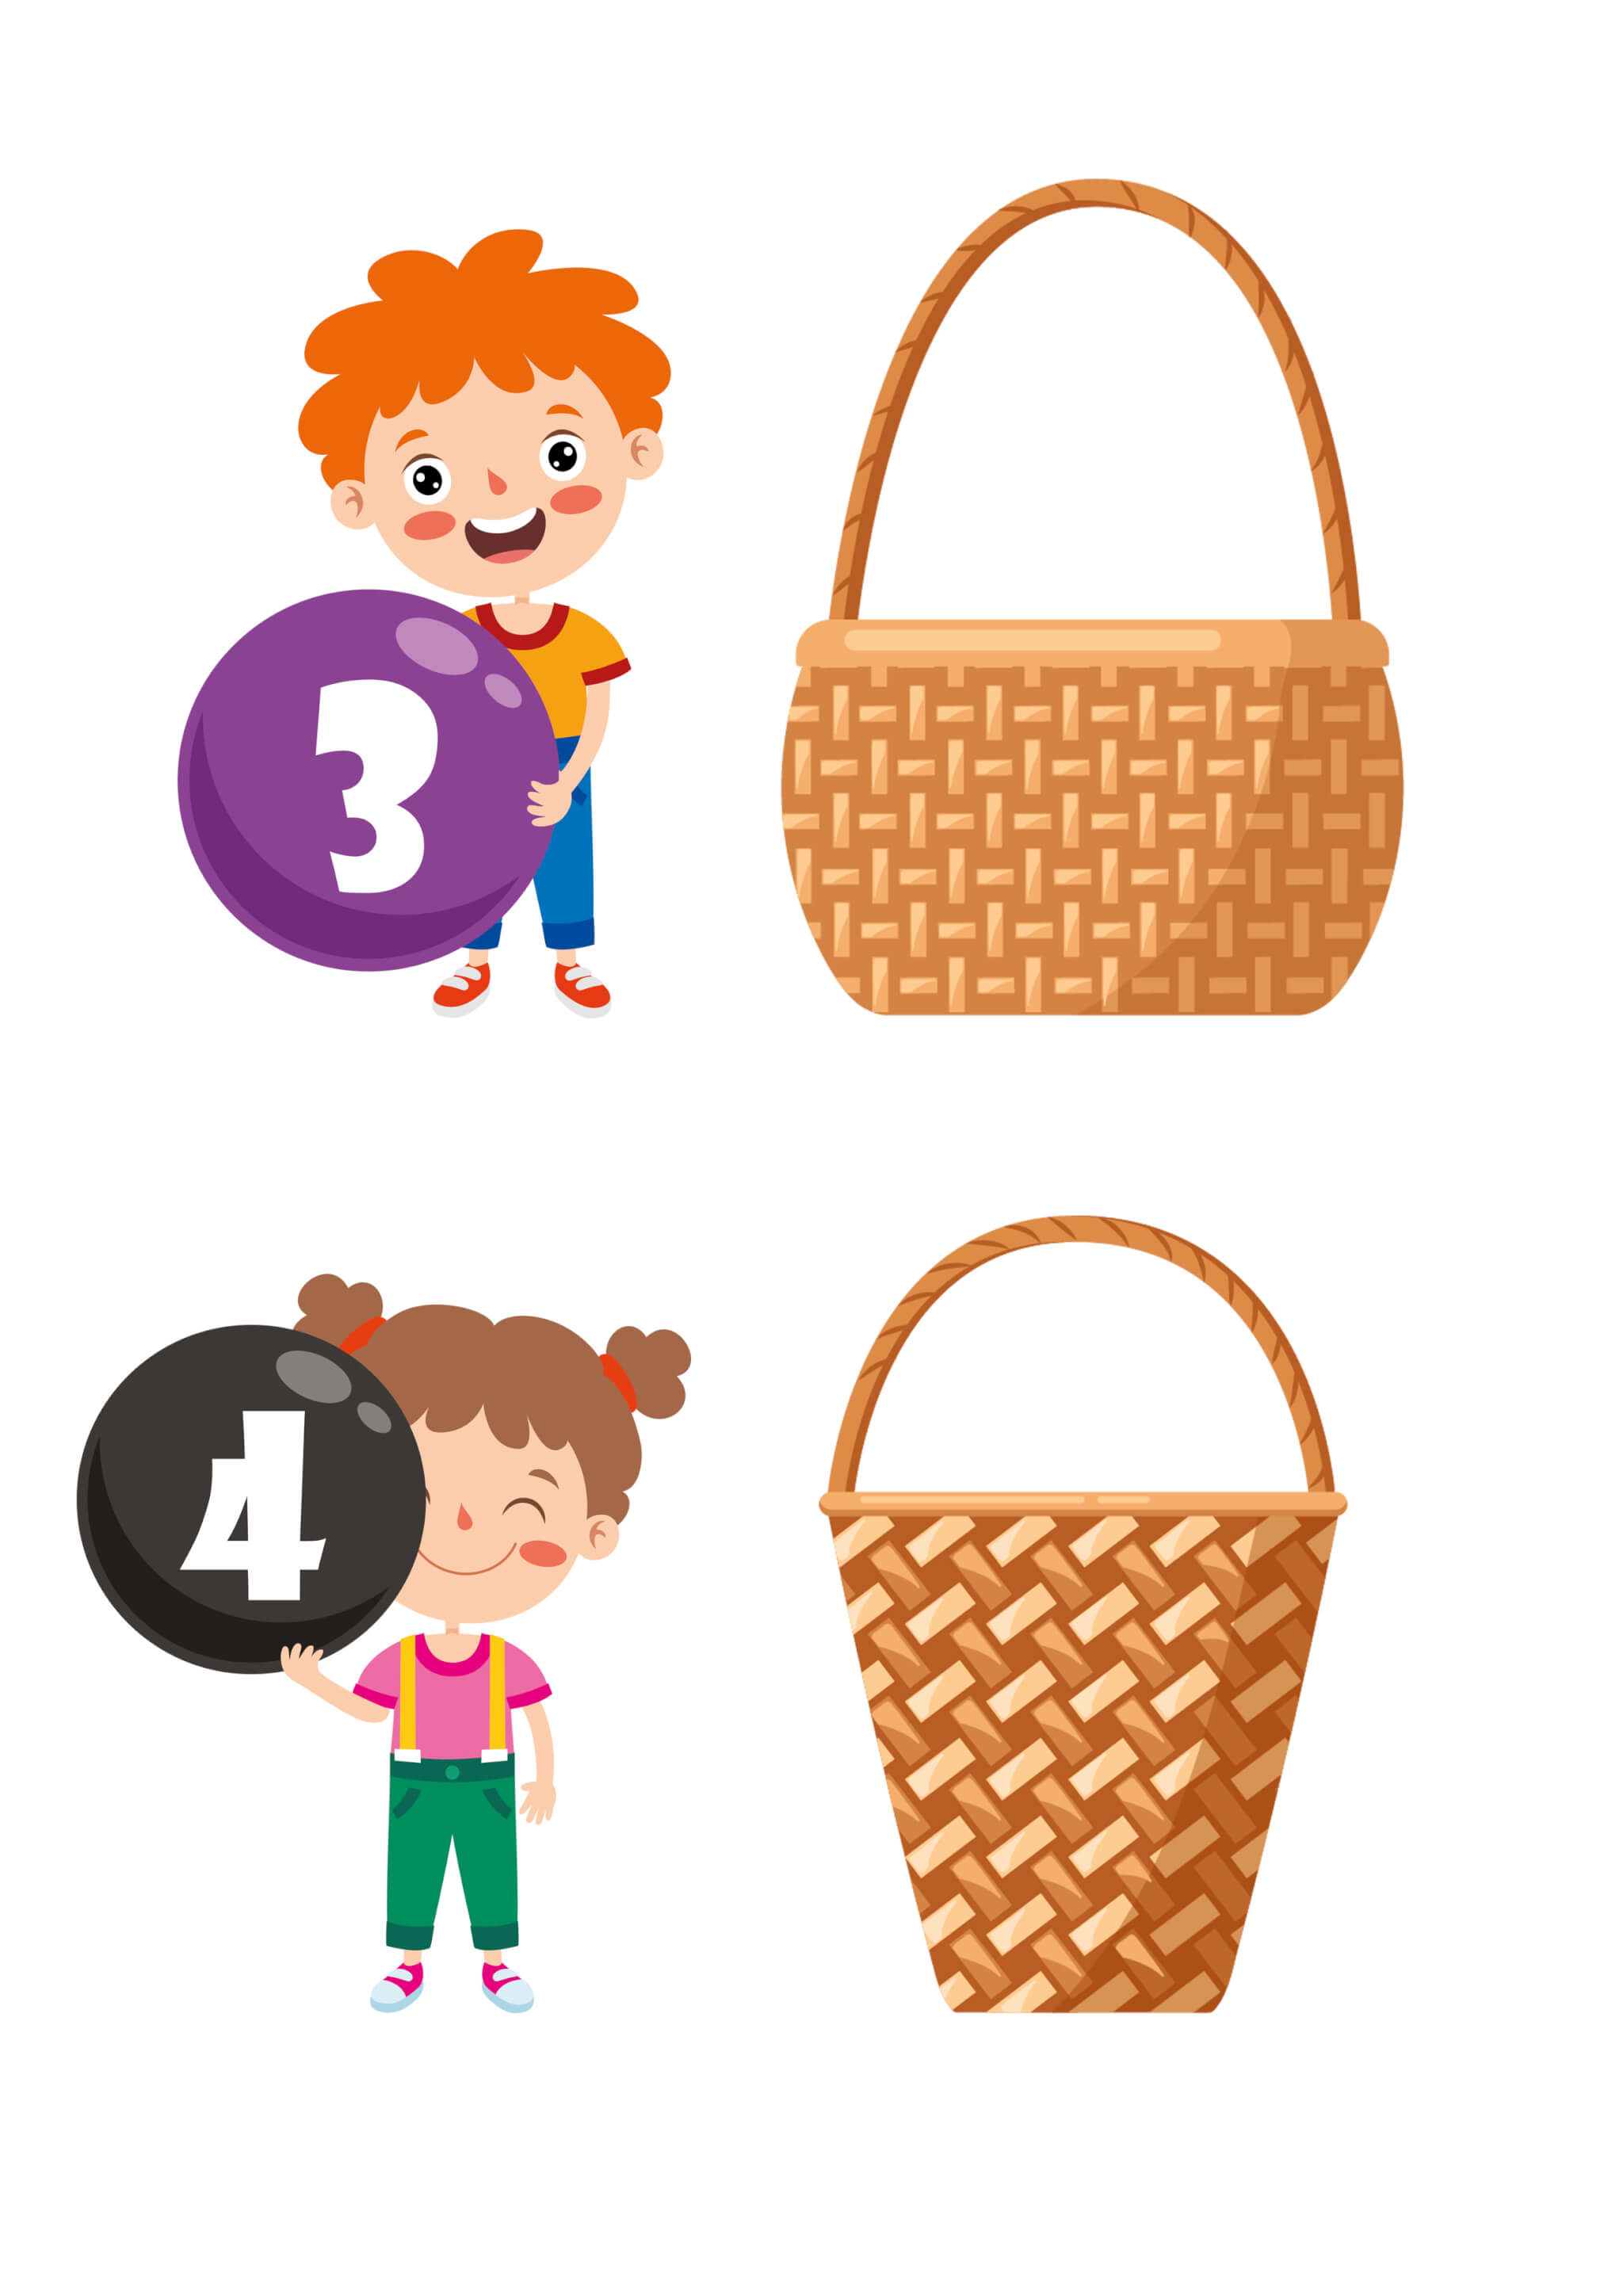 Baskets Math Printable for Counting - Image 3